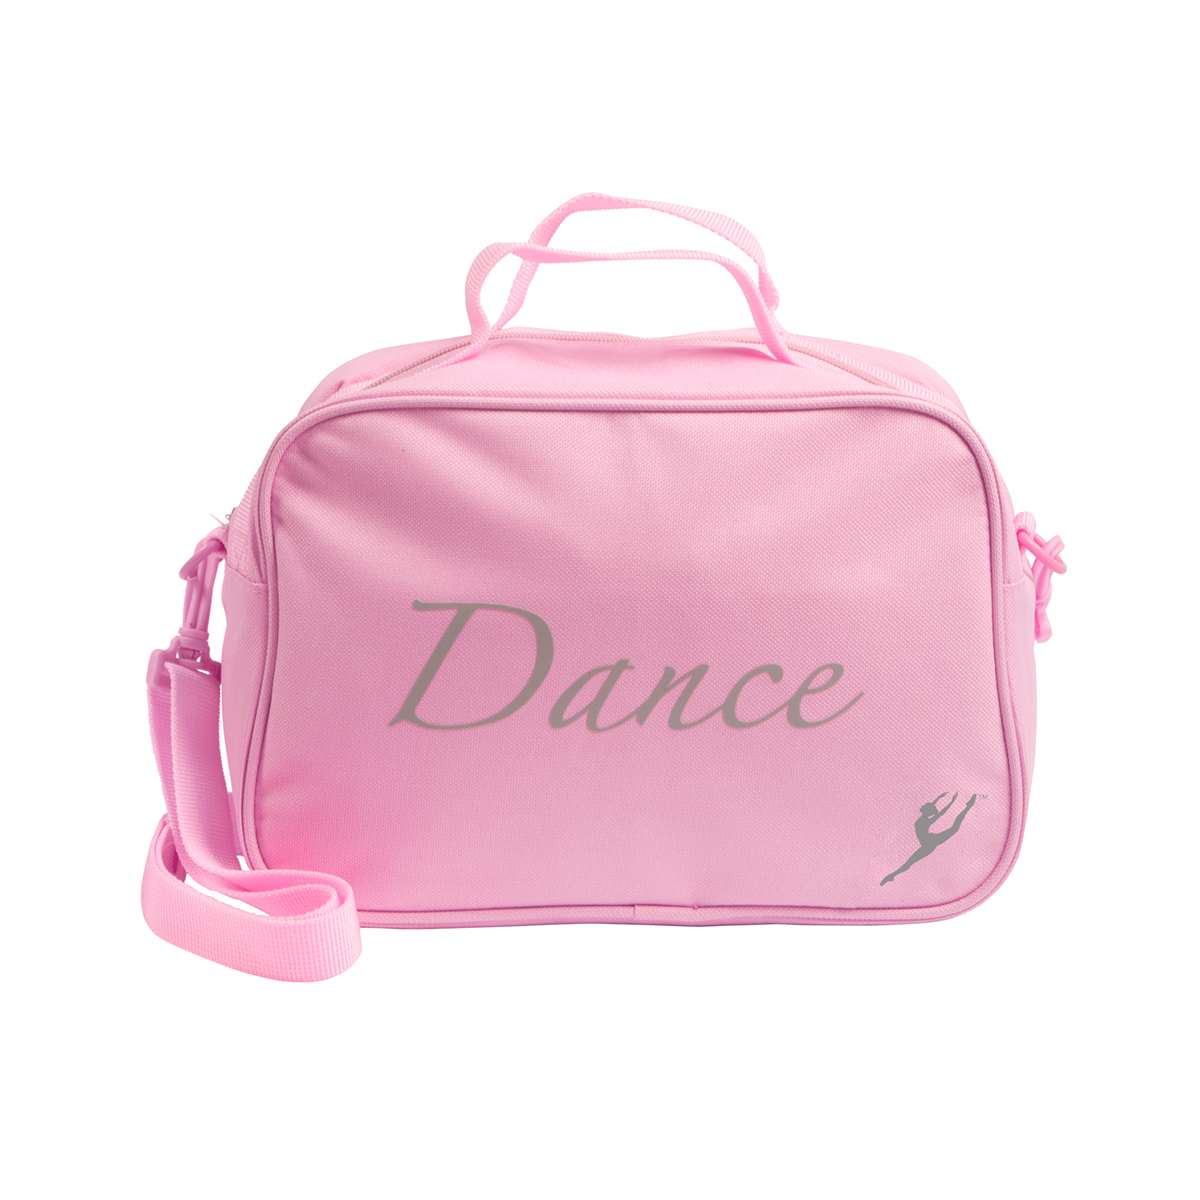 Dance Bags - Extra Spacious & Cool Dance Bags Australia Wide